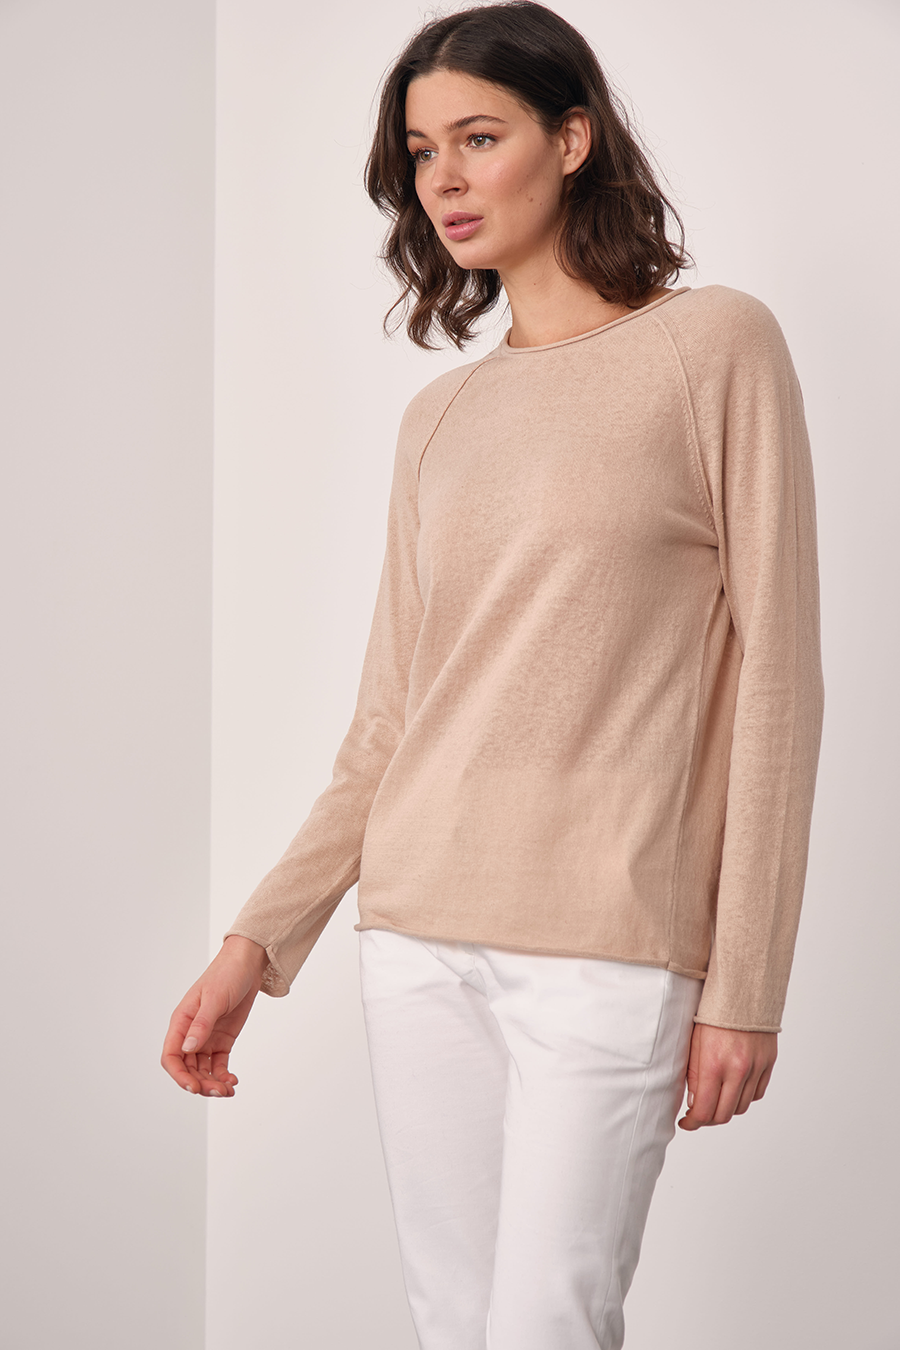 Raglan Sleeve Lightweight Unisex Sweater in Cotton/Linen Blend